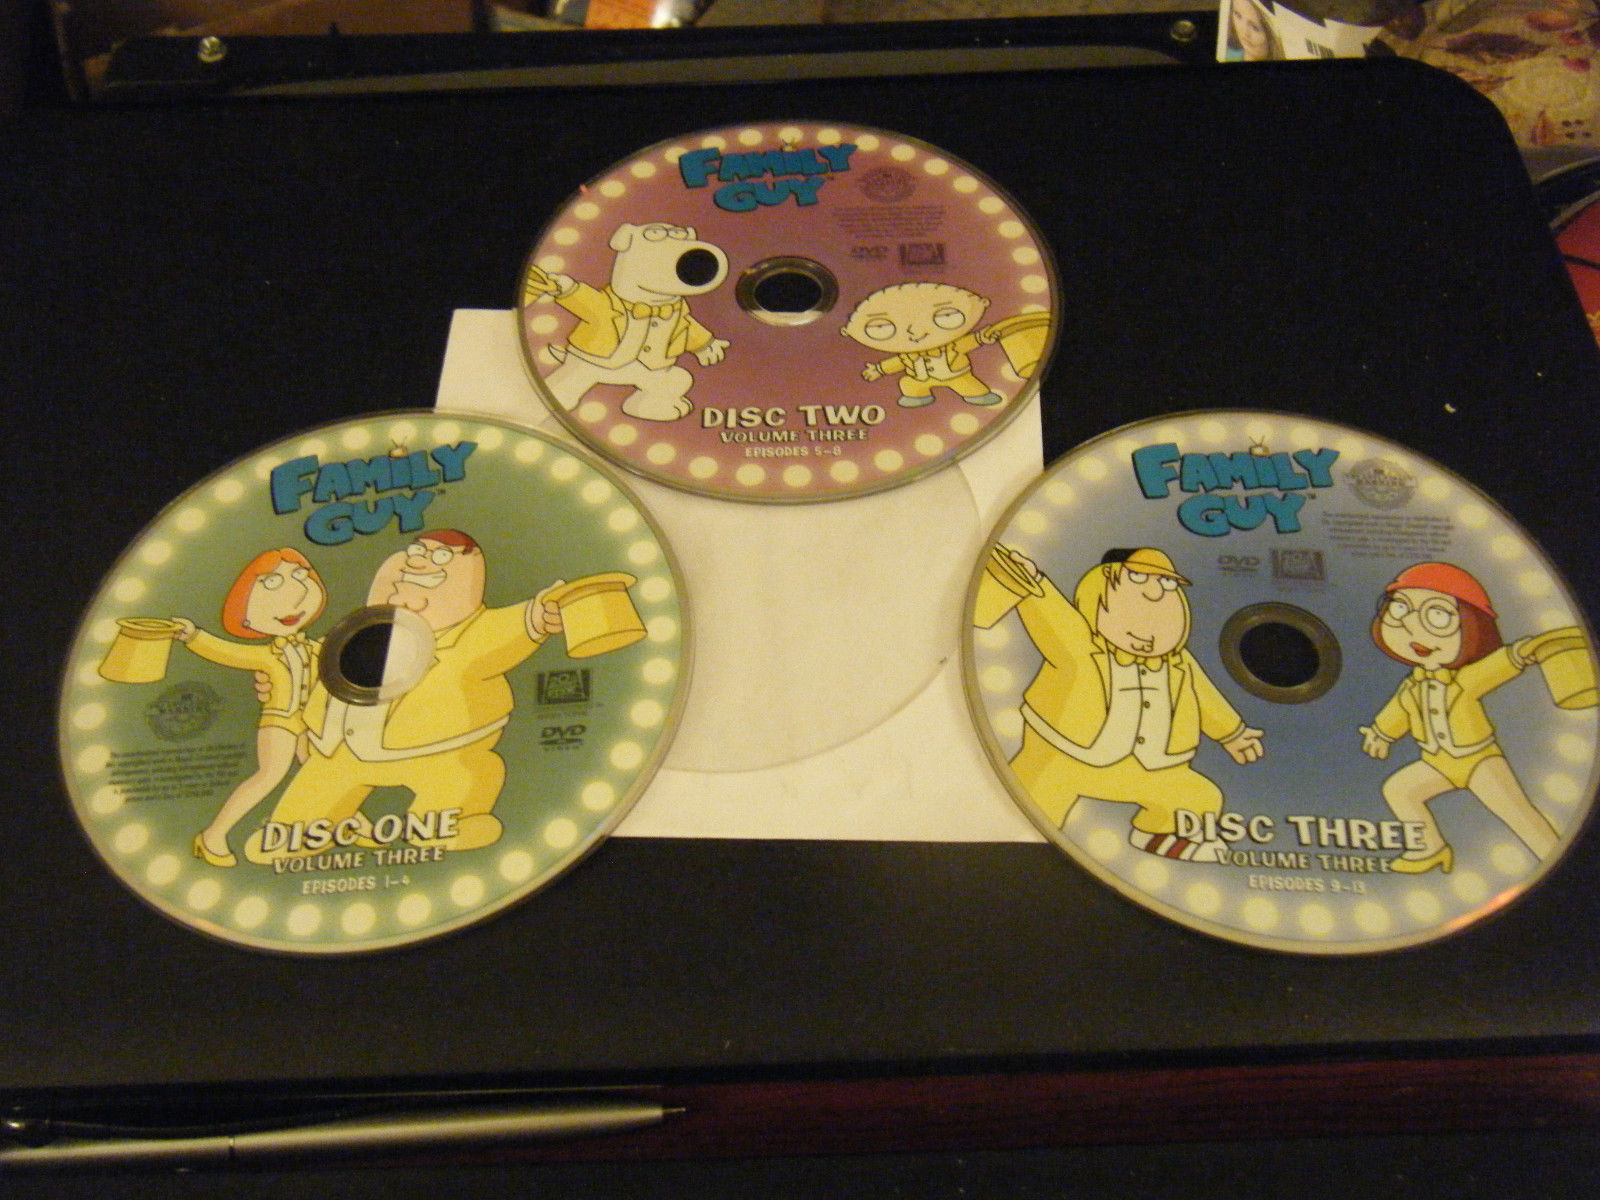 Family Guy - Volume 3 (DVD, 2009, 3-Disc Set) - Discs Only!!! - $7.46